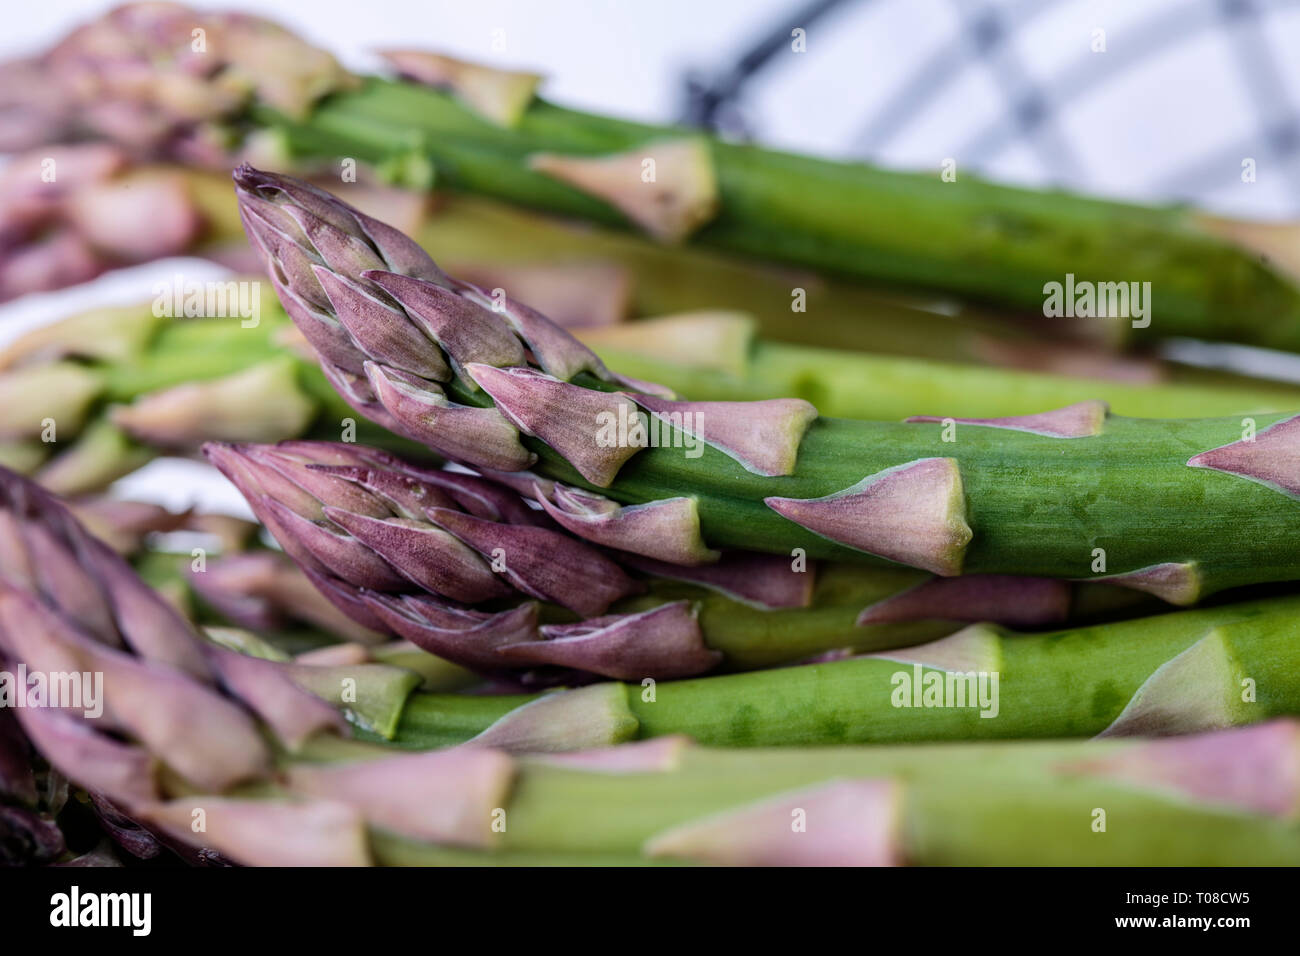 Studio Still Life with Fresh Green Asparagus Stock Photo